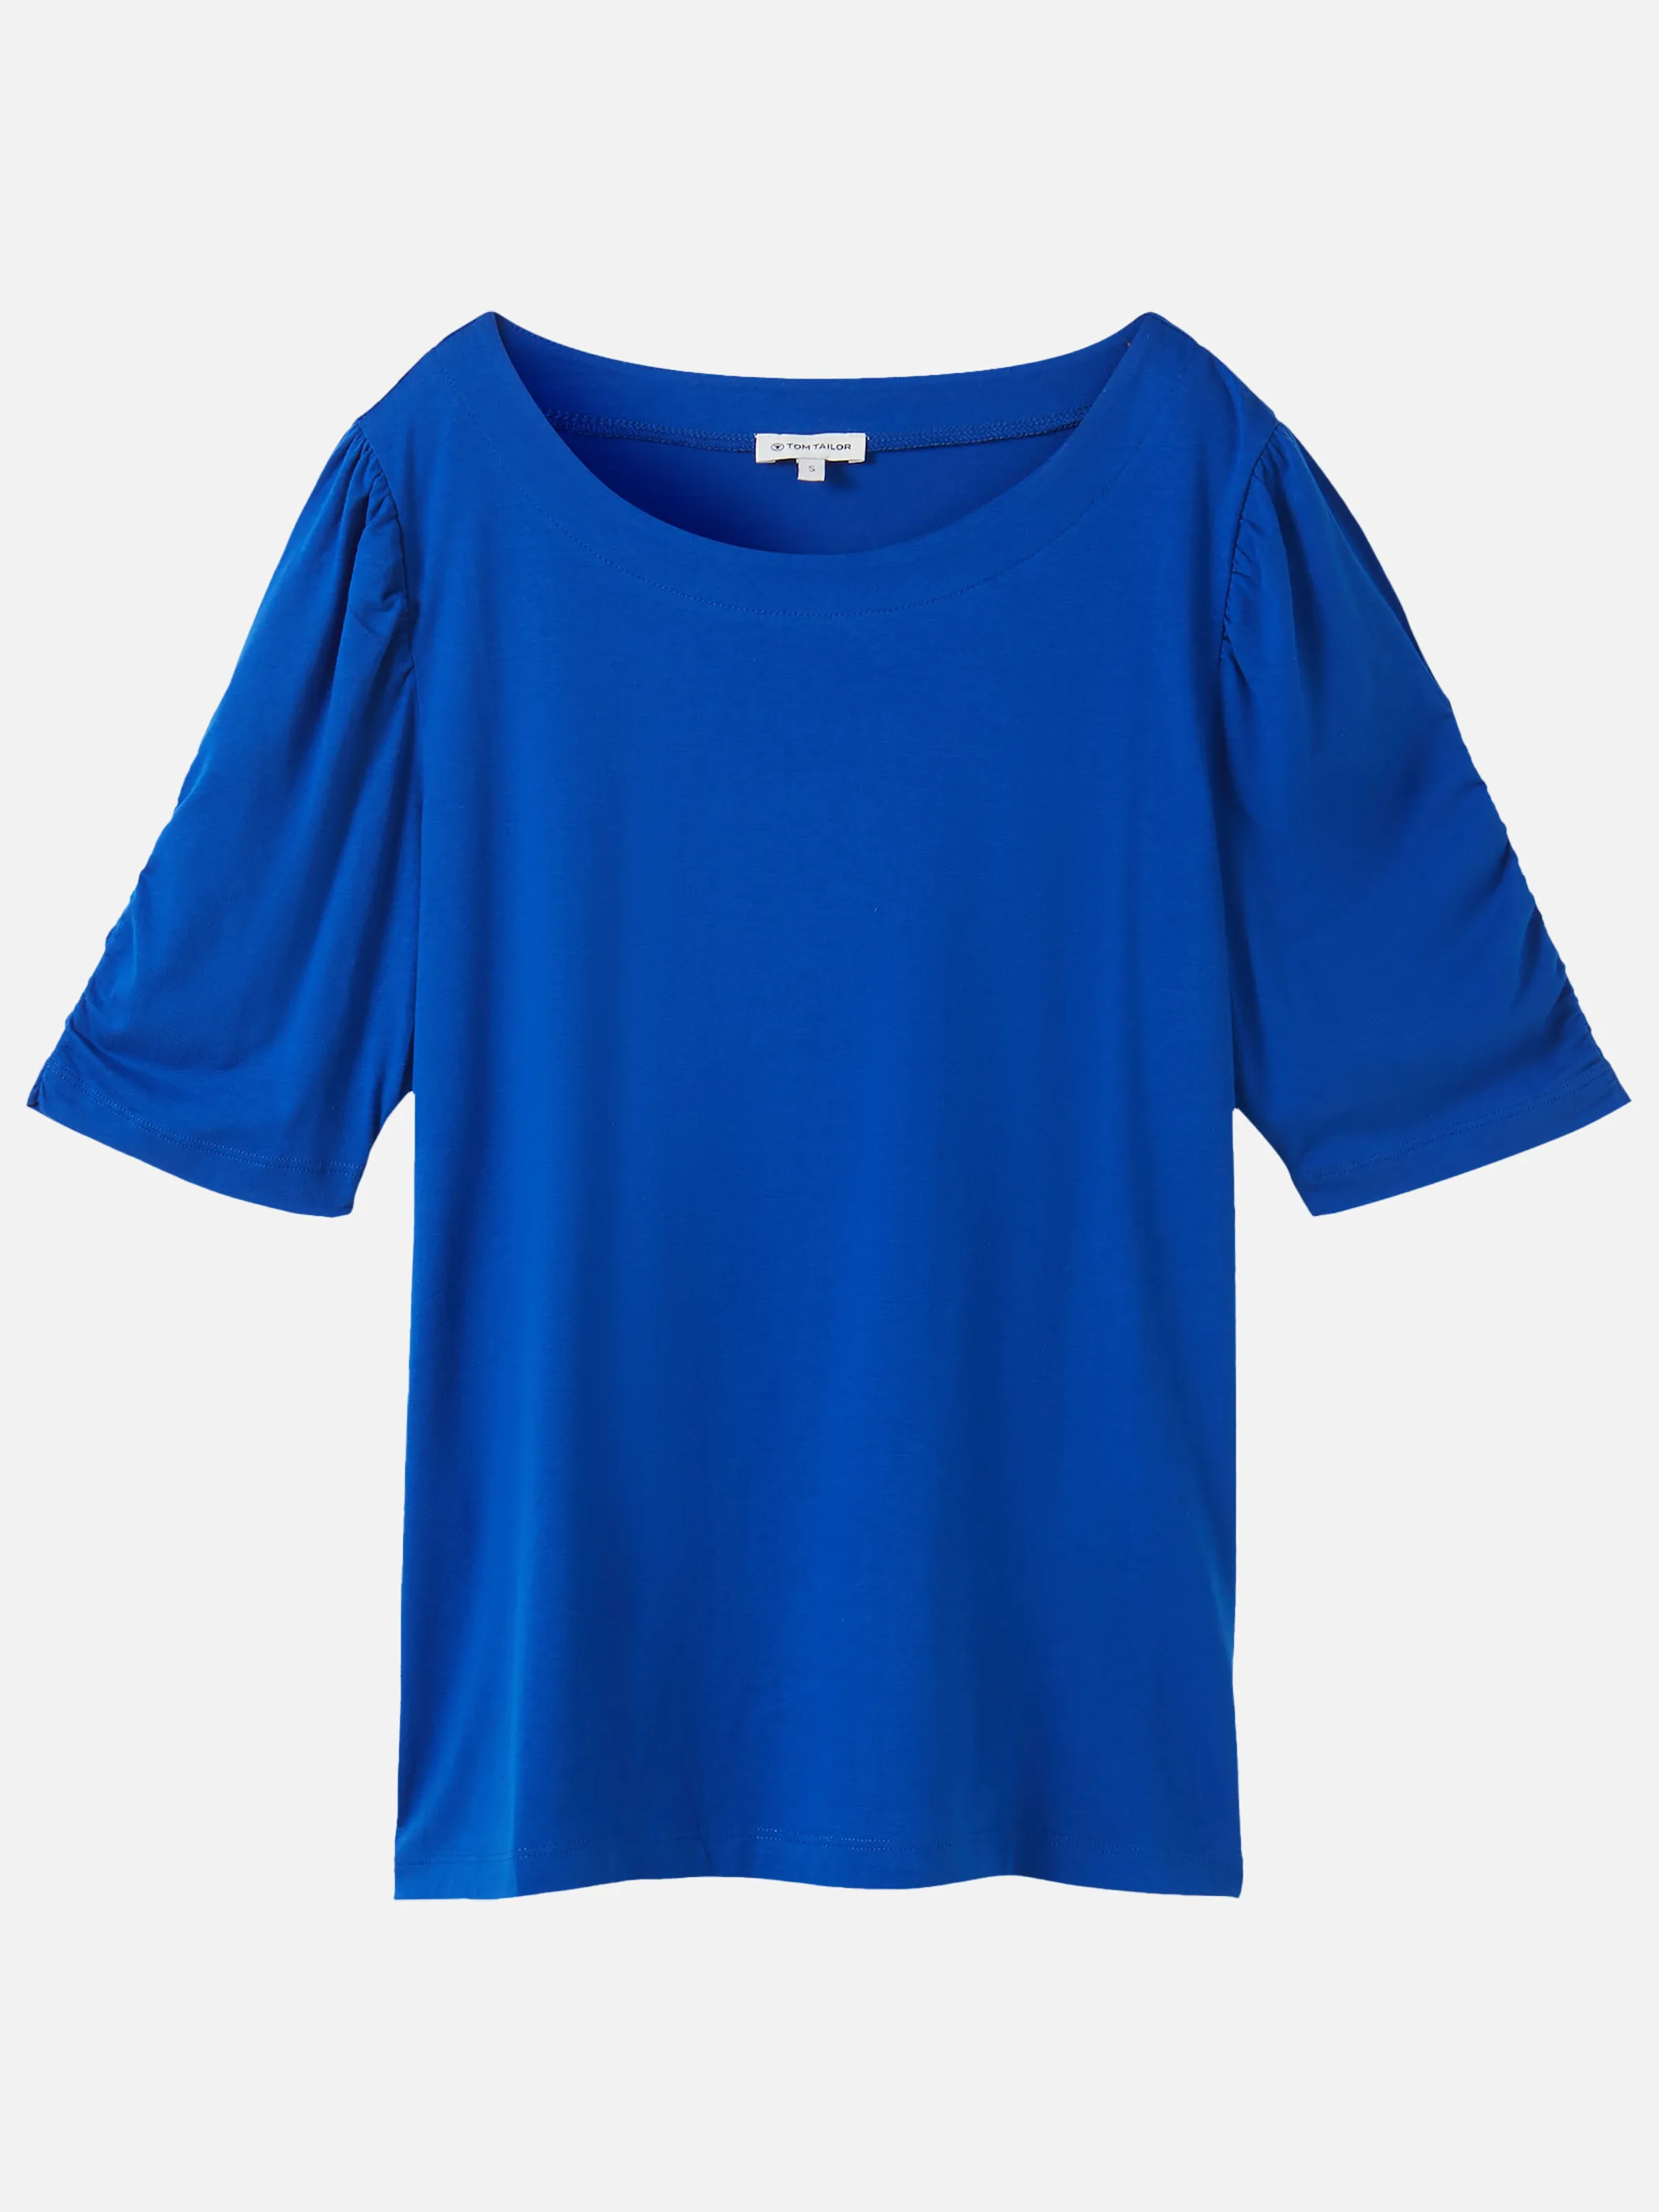 Tom Tailor 1041572 T-shirt gathered sleeve Blau 895787 14531 1